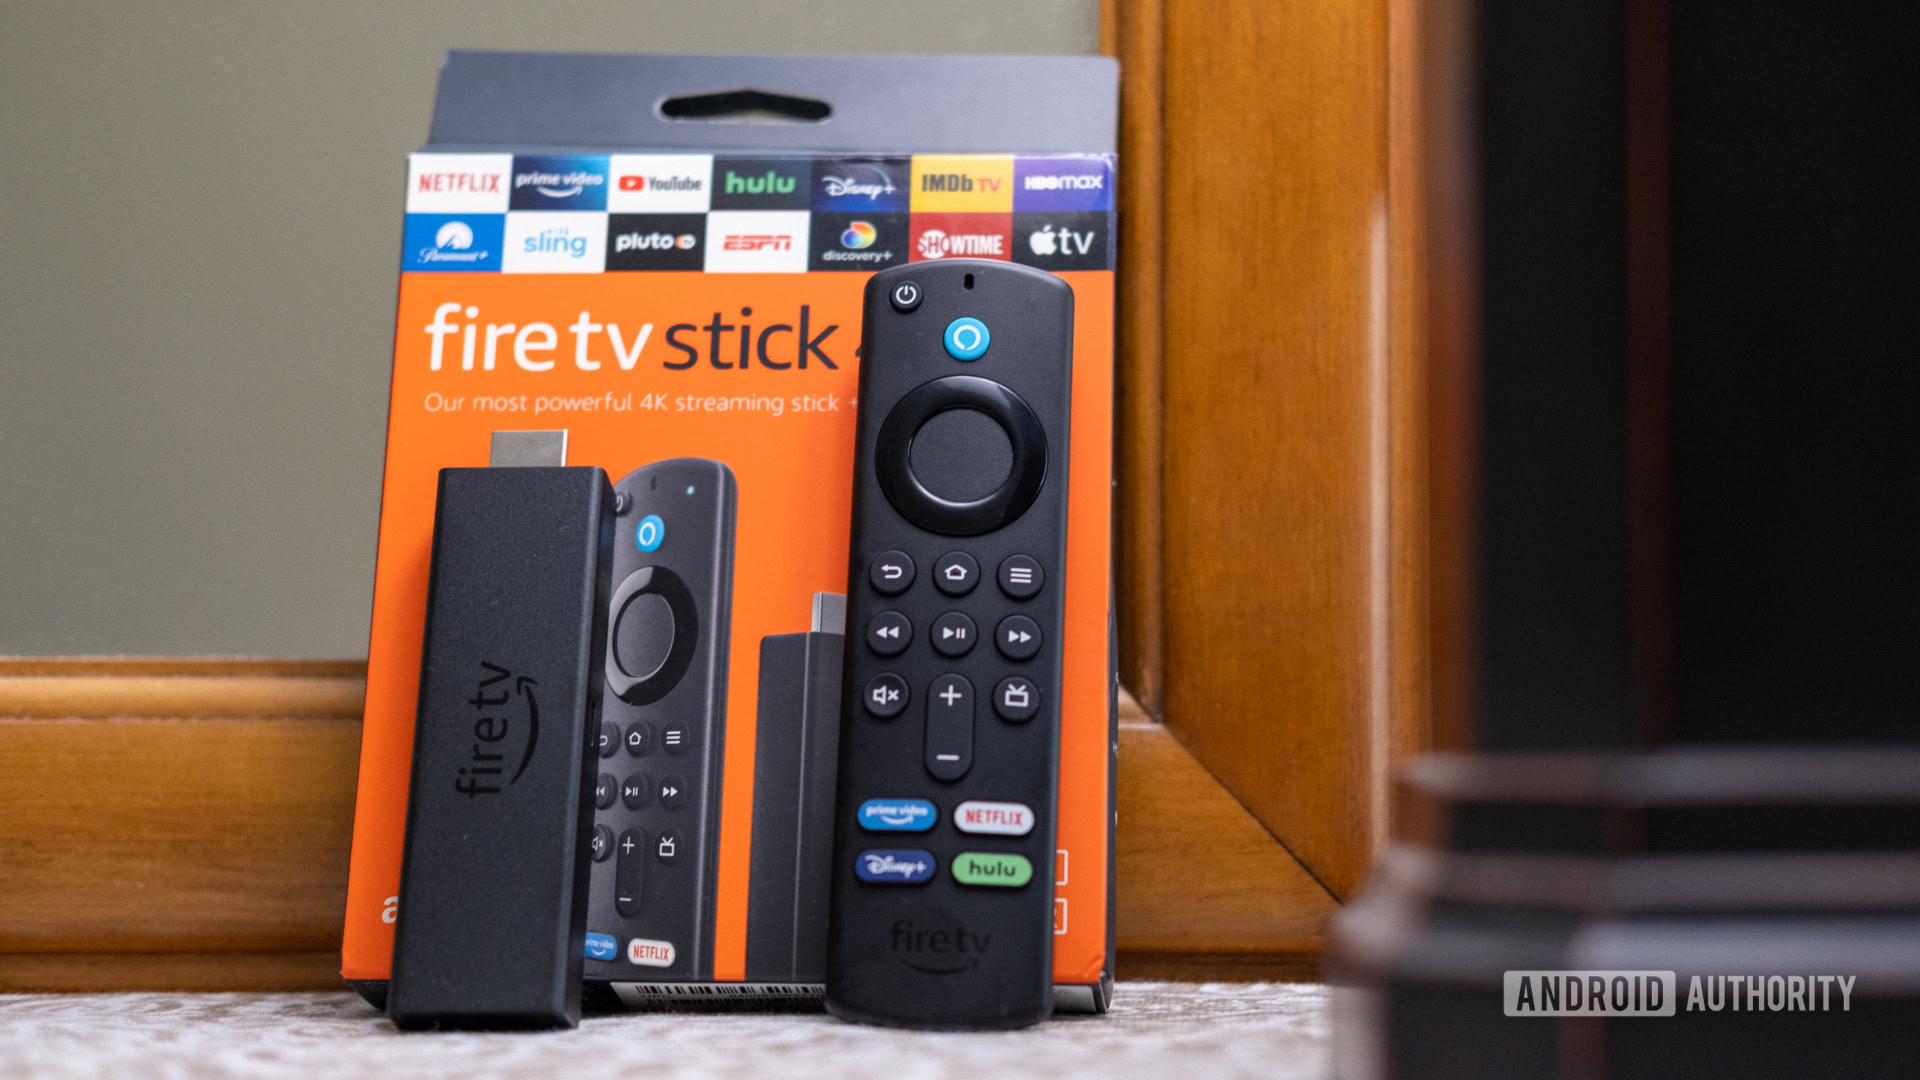 Fire TV Stick 4K Max  Review en español 